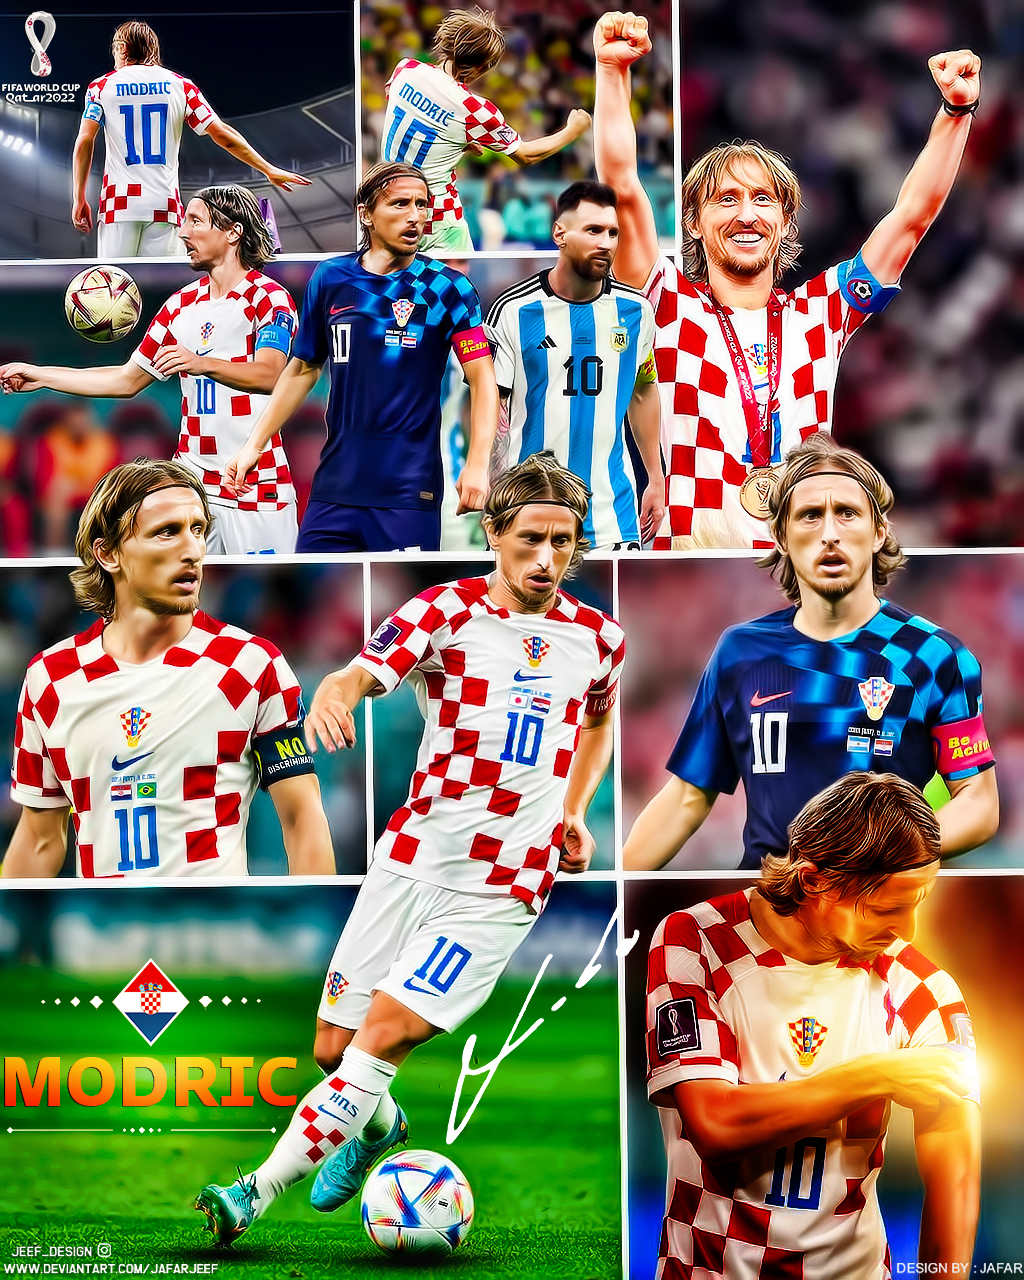 Luka Modric - Croatia Wallpaper 2022 by ChrisRamos4GFX on DeviantArt